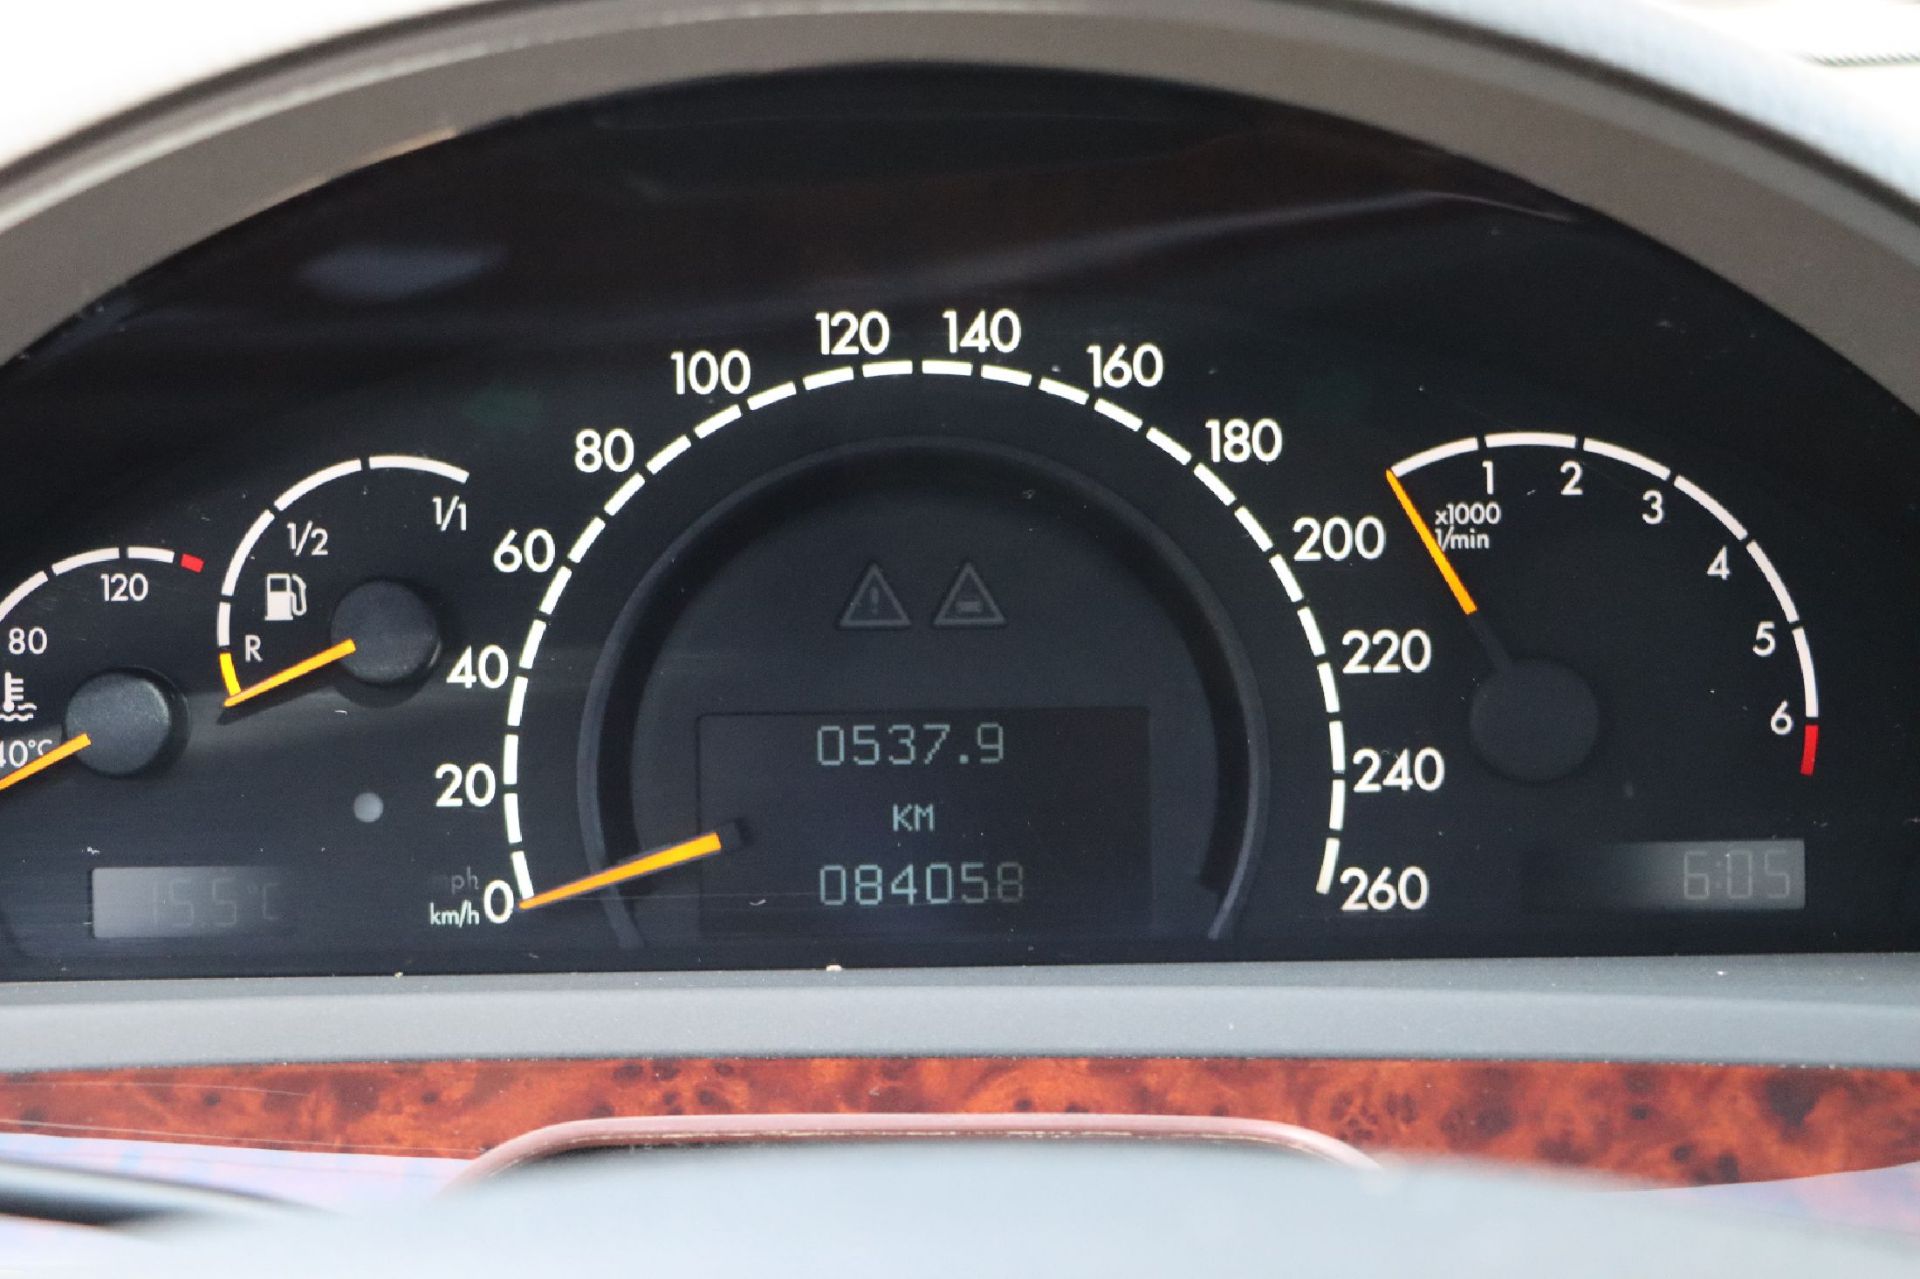 Mercedes-Benz S500, Fahrgestellnummer: WDB2200751A124714, - Image 8 of 9